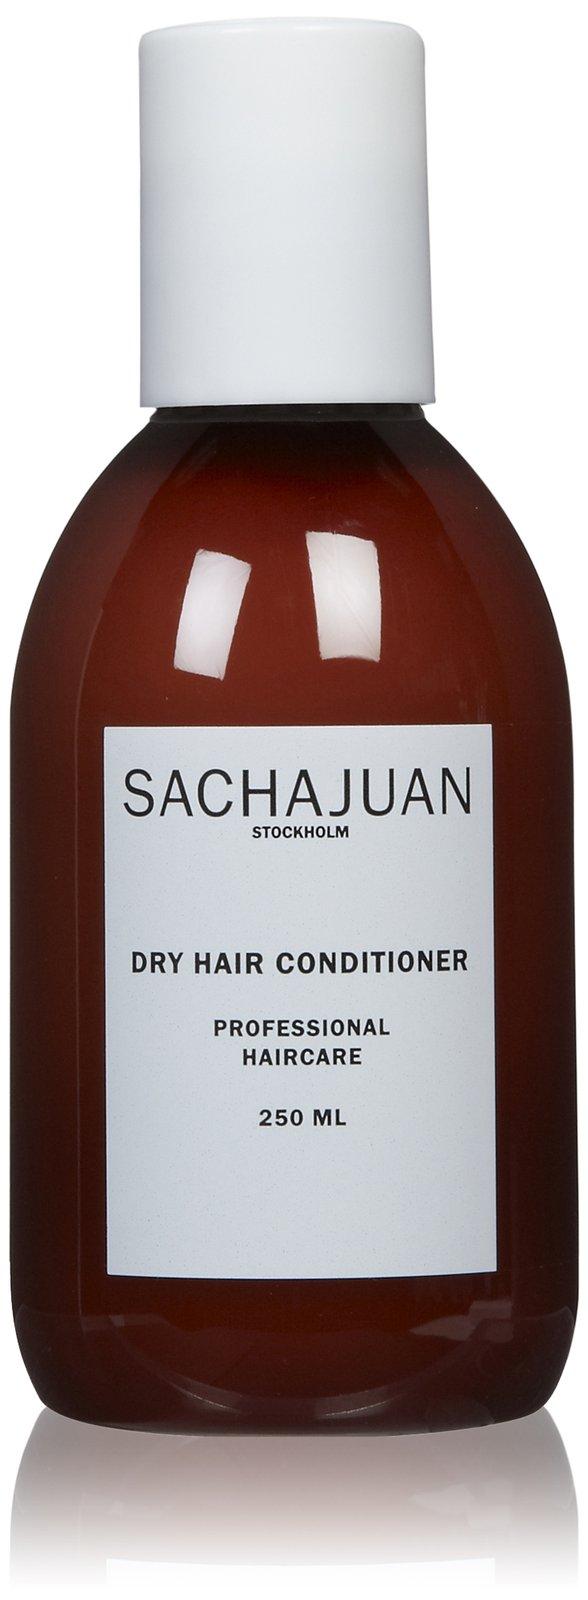 Sachajuan Dry Hair Conditioner